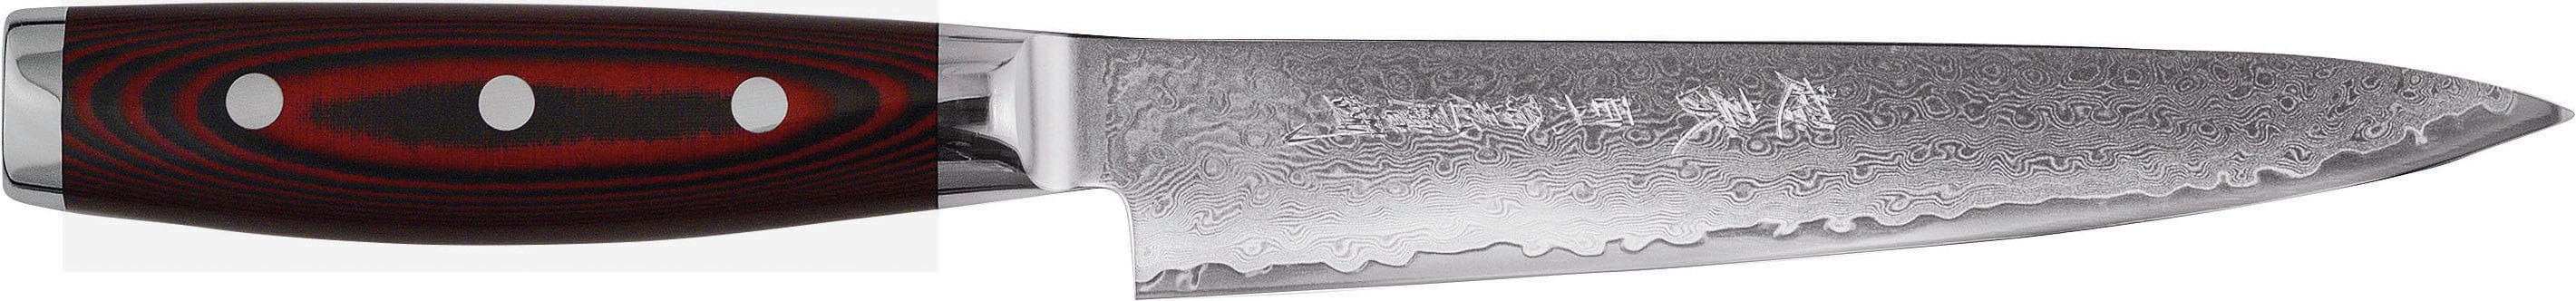 Cuchillo de fileteado yaxell super gou 161, 180 mm